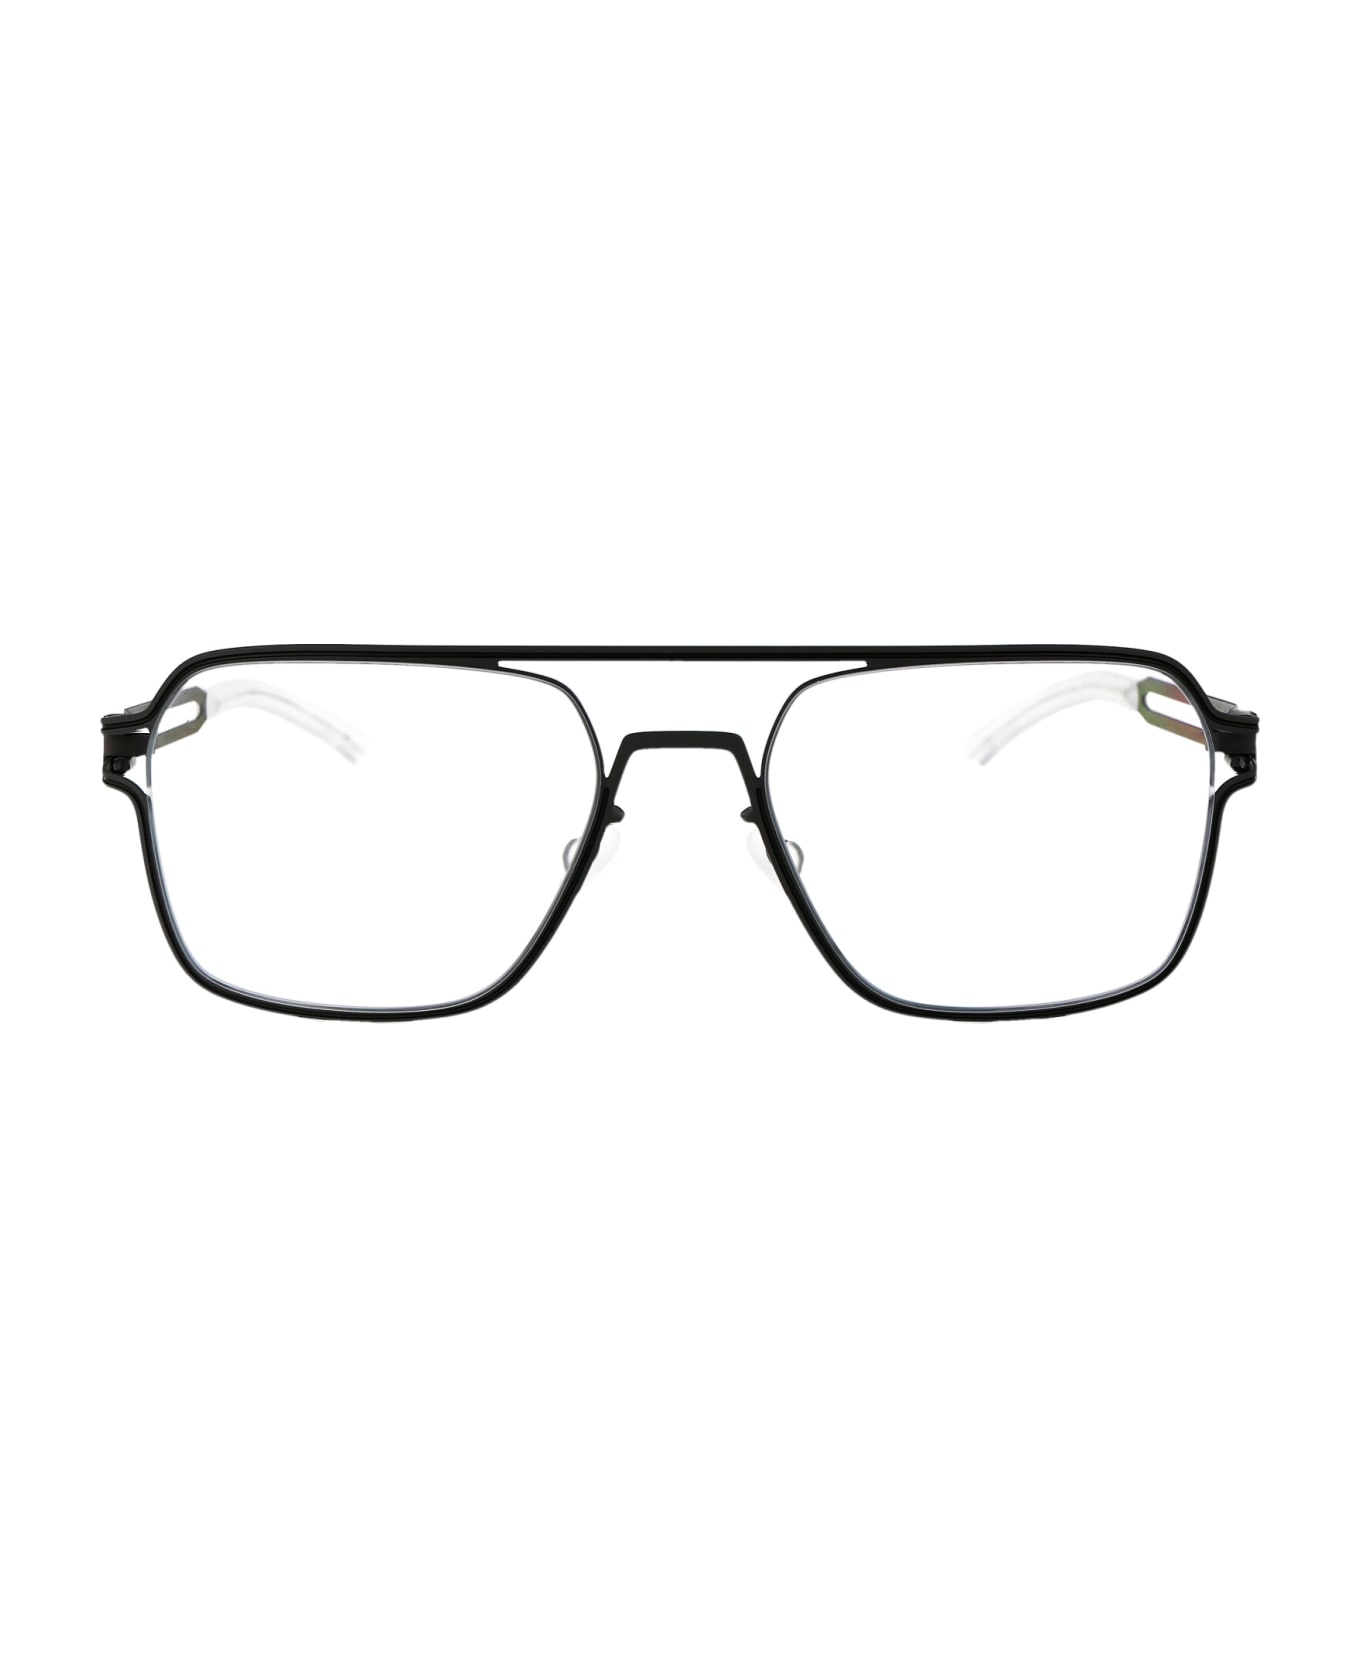 Mykita Jalo Glasses - 515 Storm Grey/Black Clear